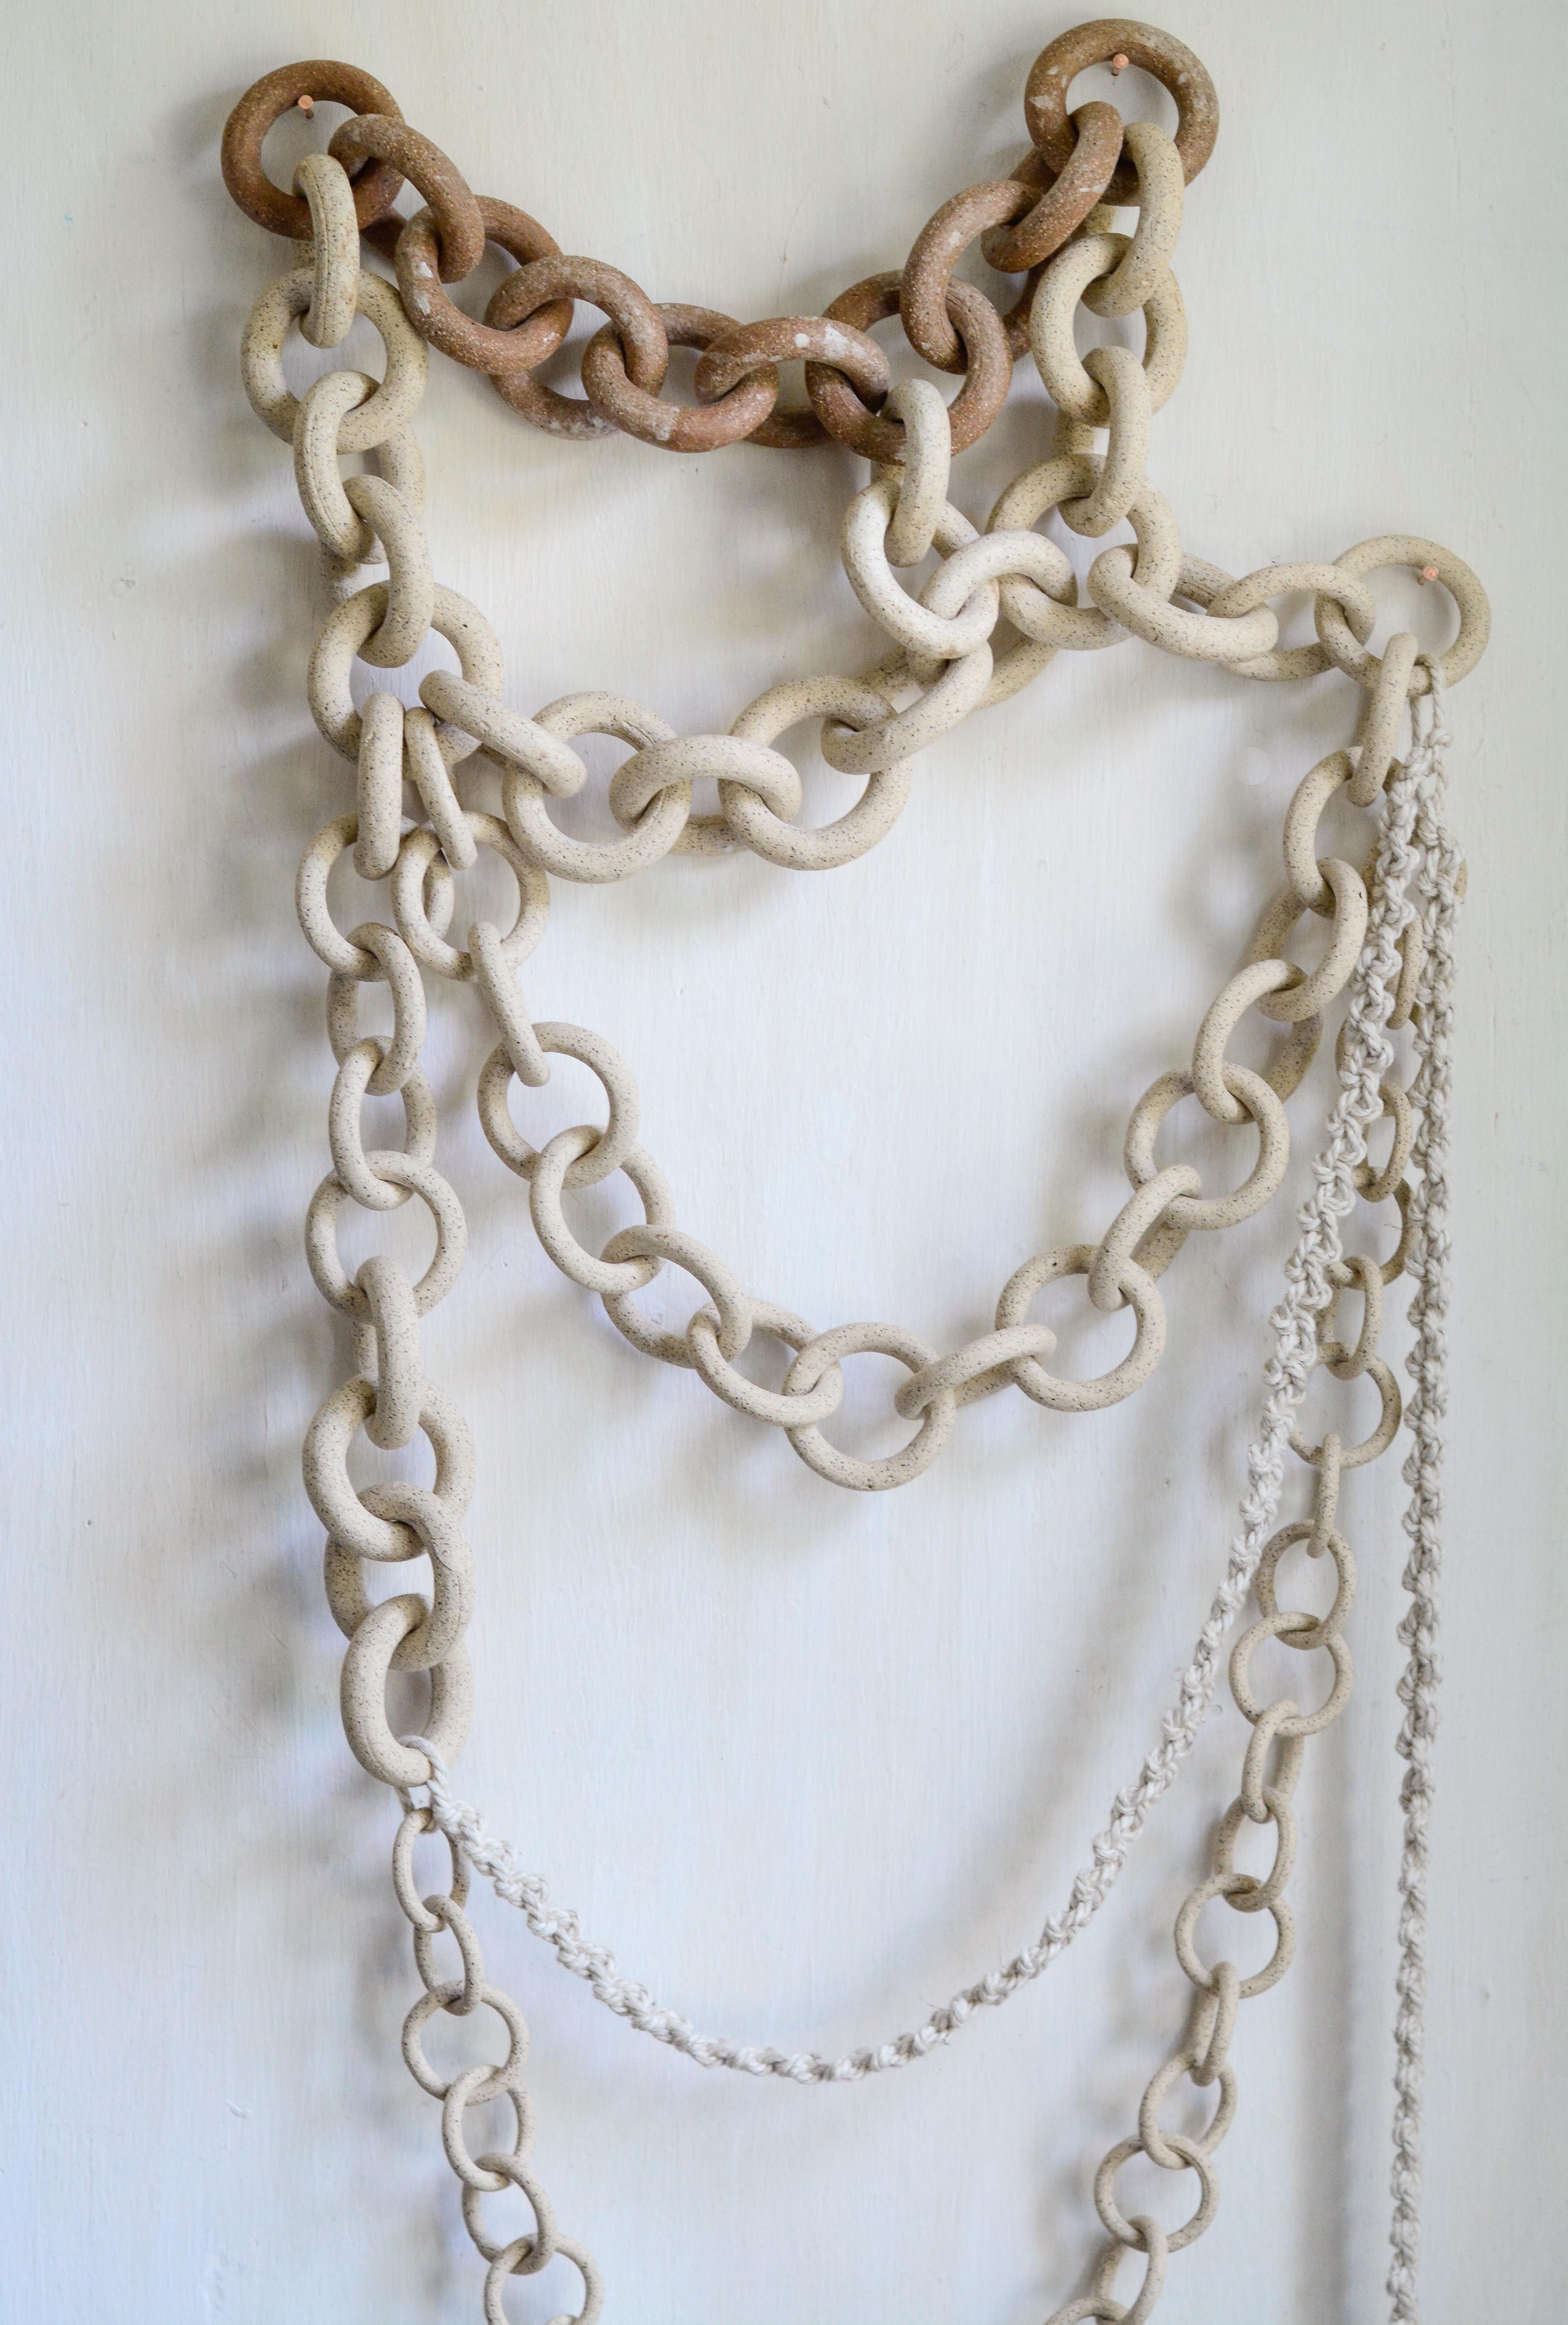 American Ceramic Link Chain Wall Sculpture